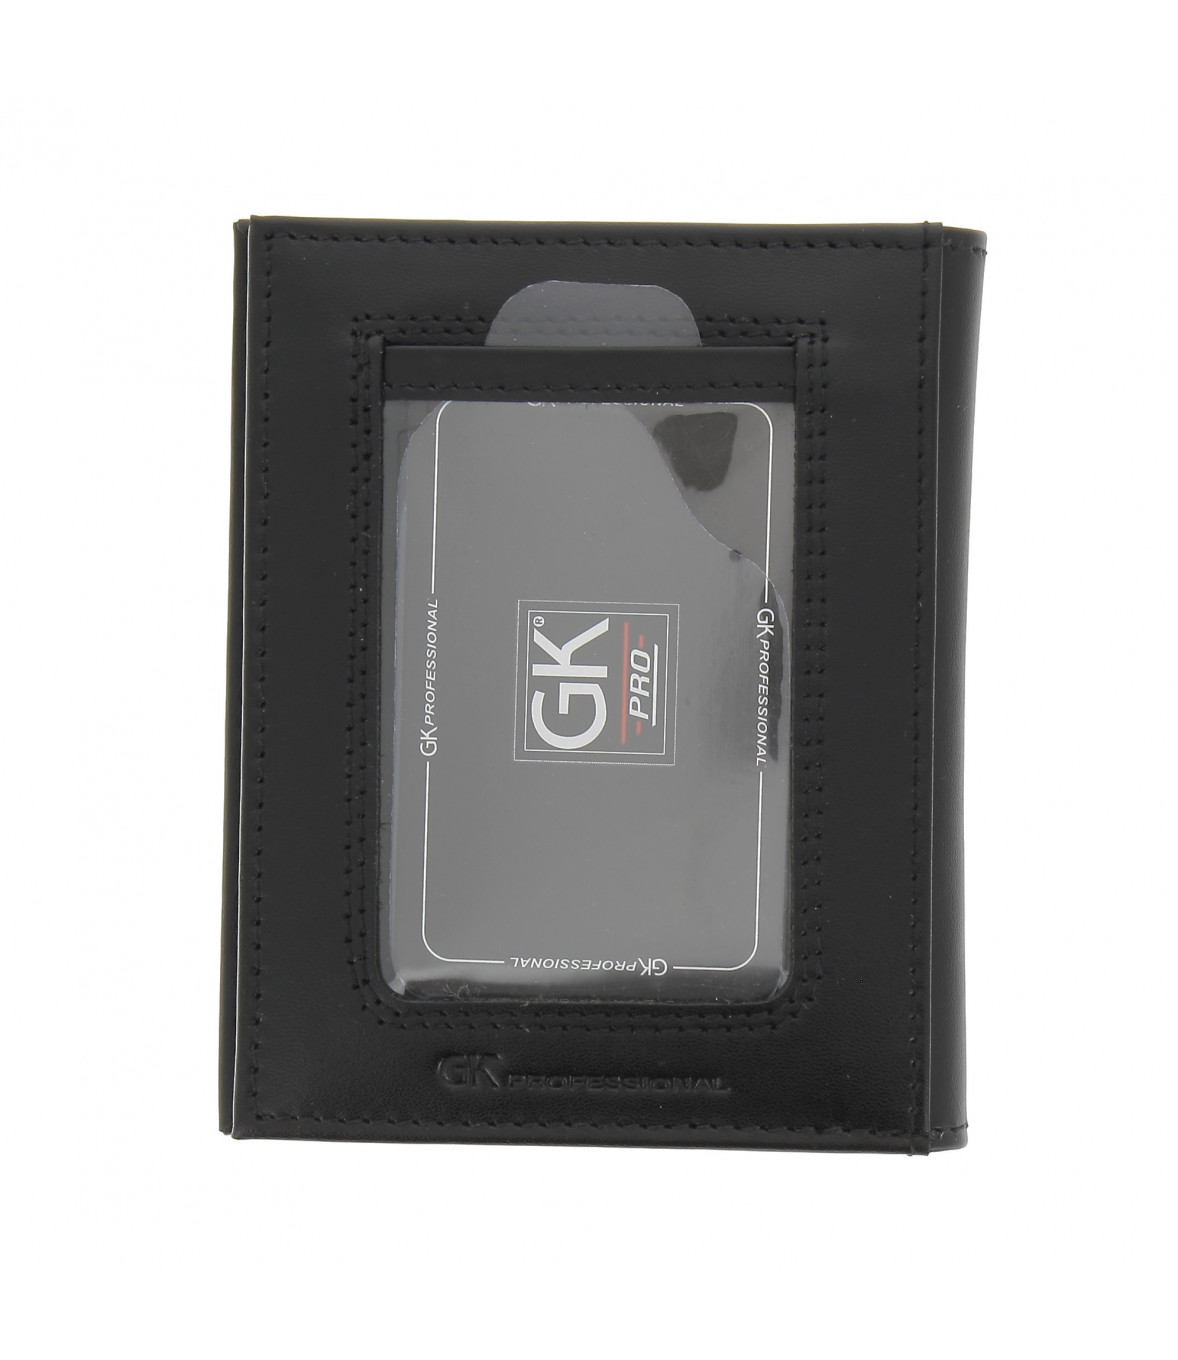 Porte-carte FDO GK Pro 2 VV MINI sur